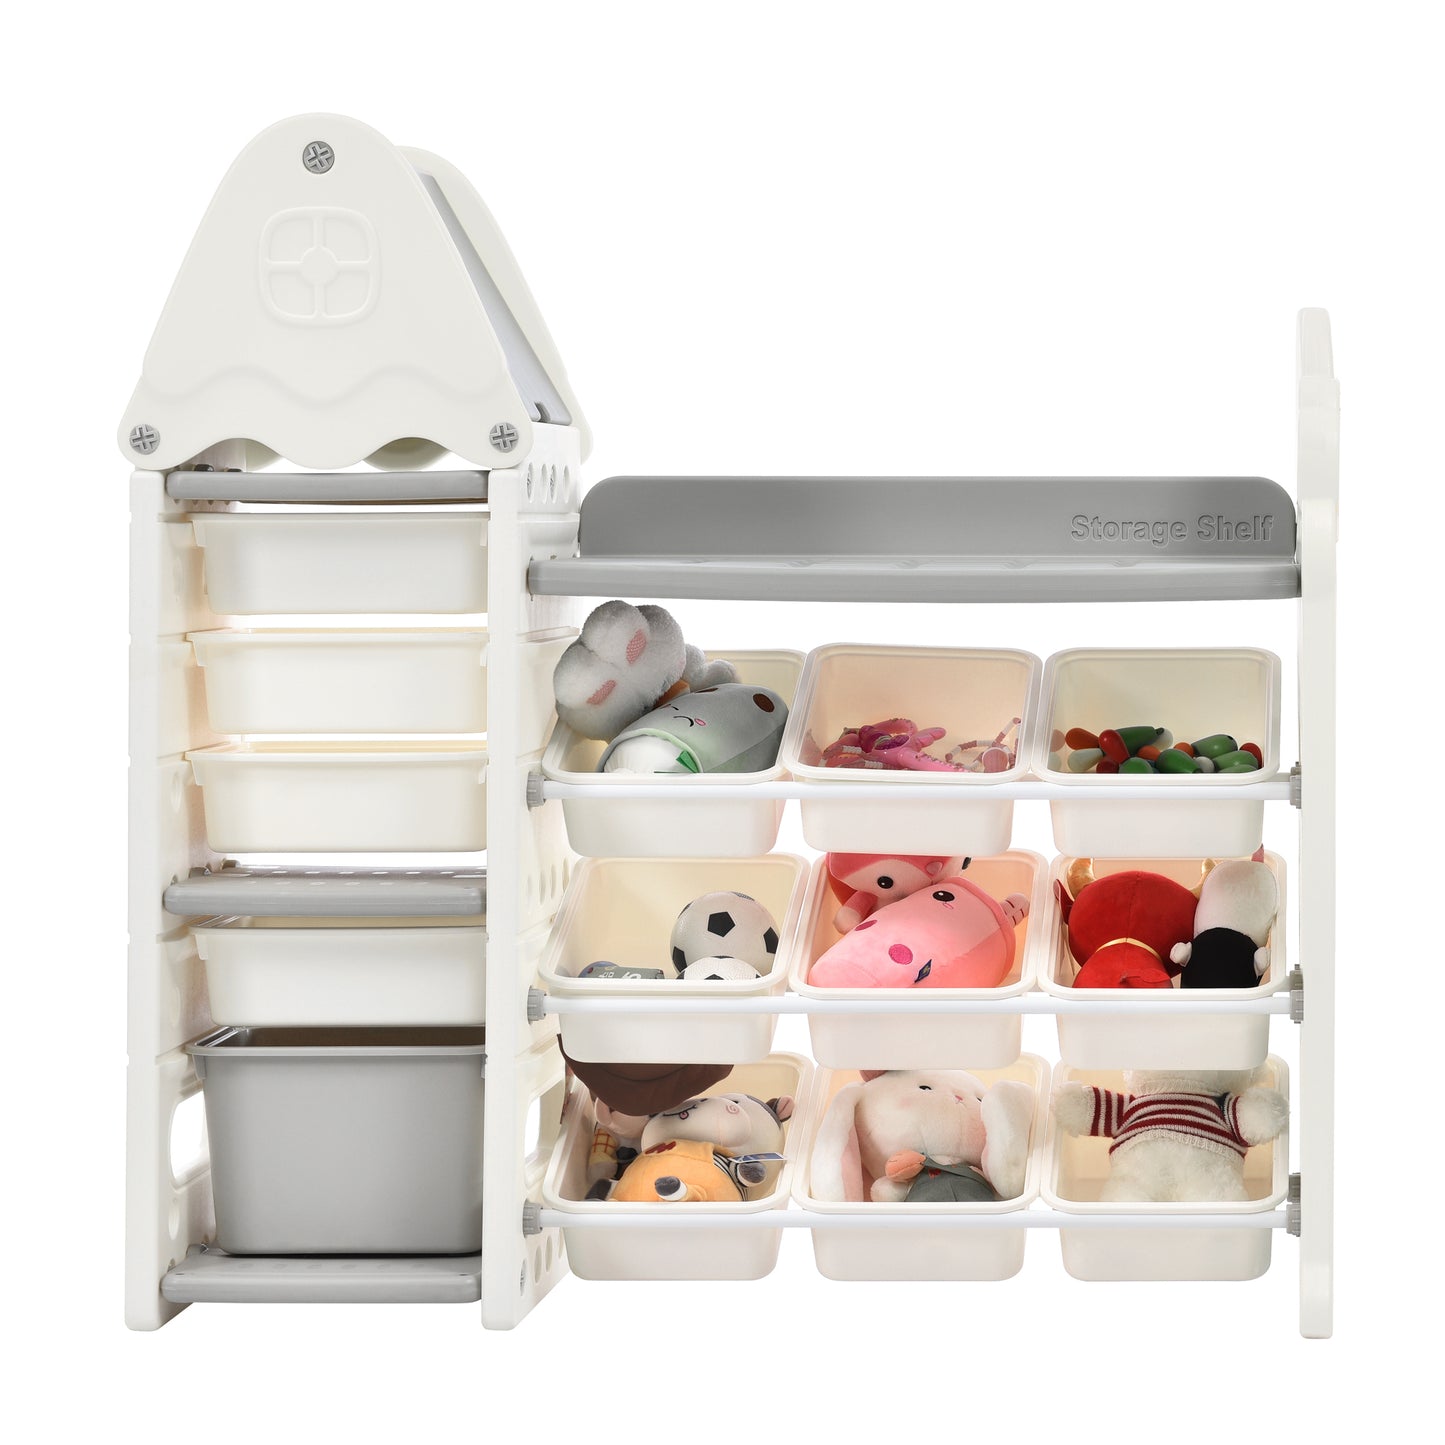 "Kids Bookshelf Toy Storage Organizer with 17 Bins and 4 Bookshelves - Multi-functional Nursery Organizer for Kids Furniture Set - Toy Storage Cabinet Unit with HDPE Shelf and Bins"